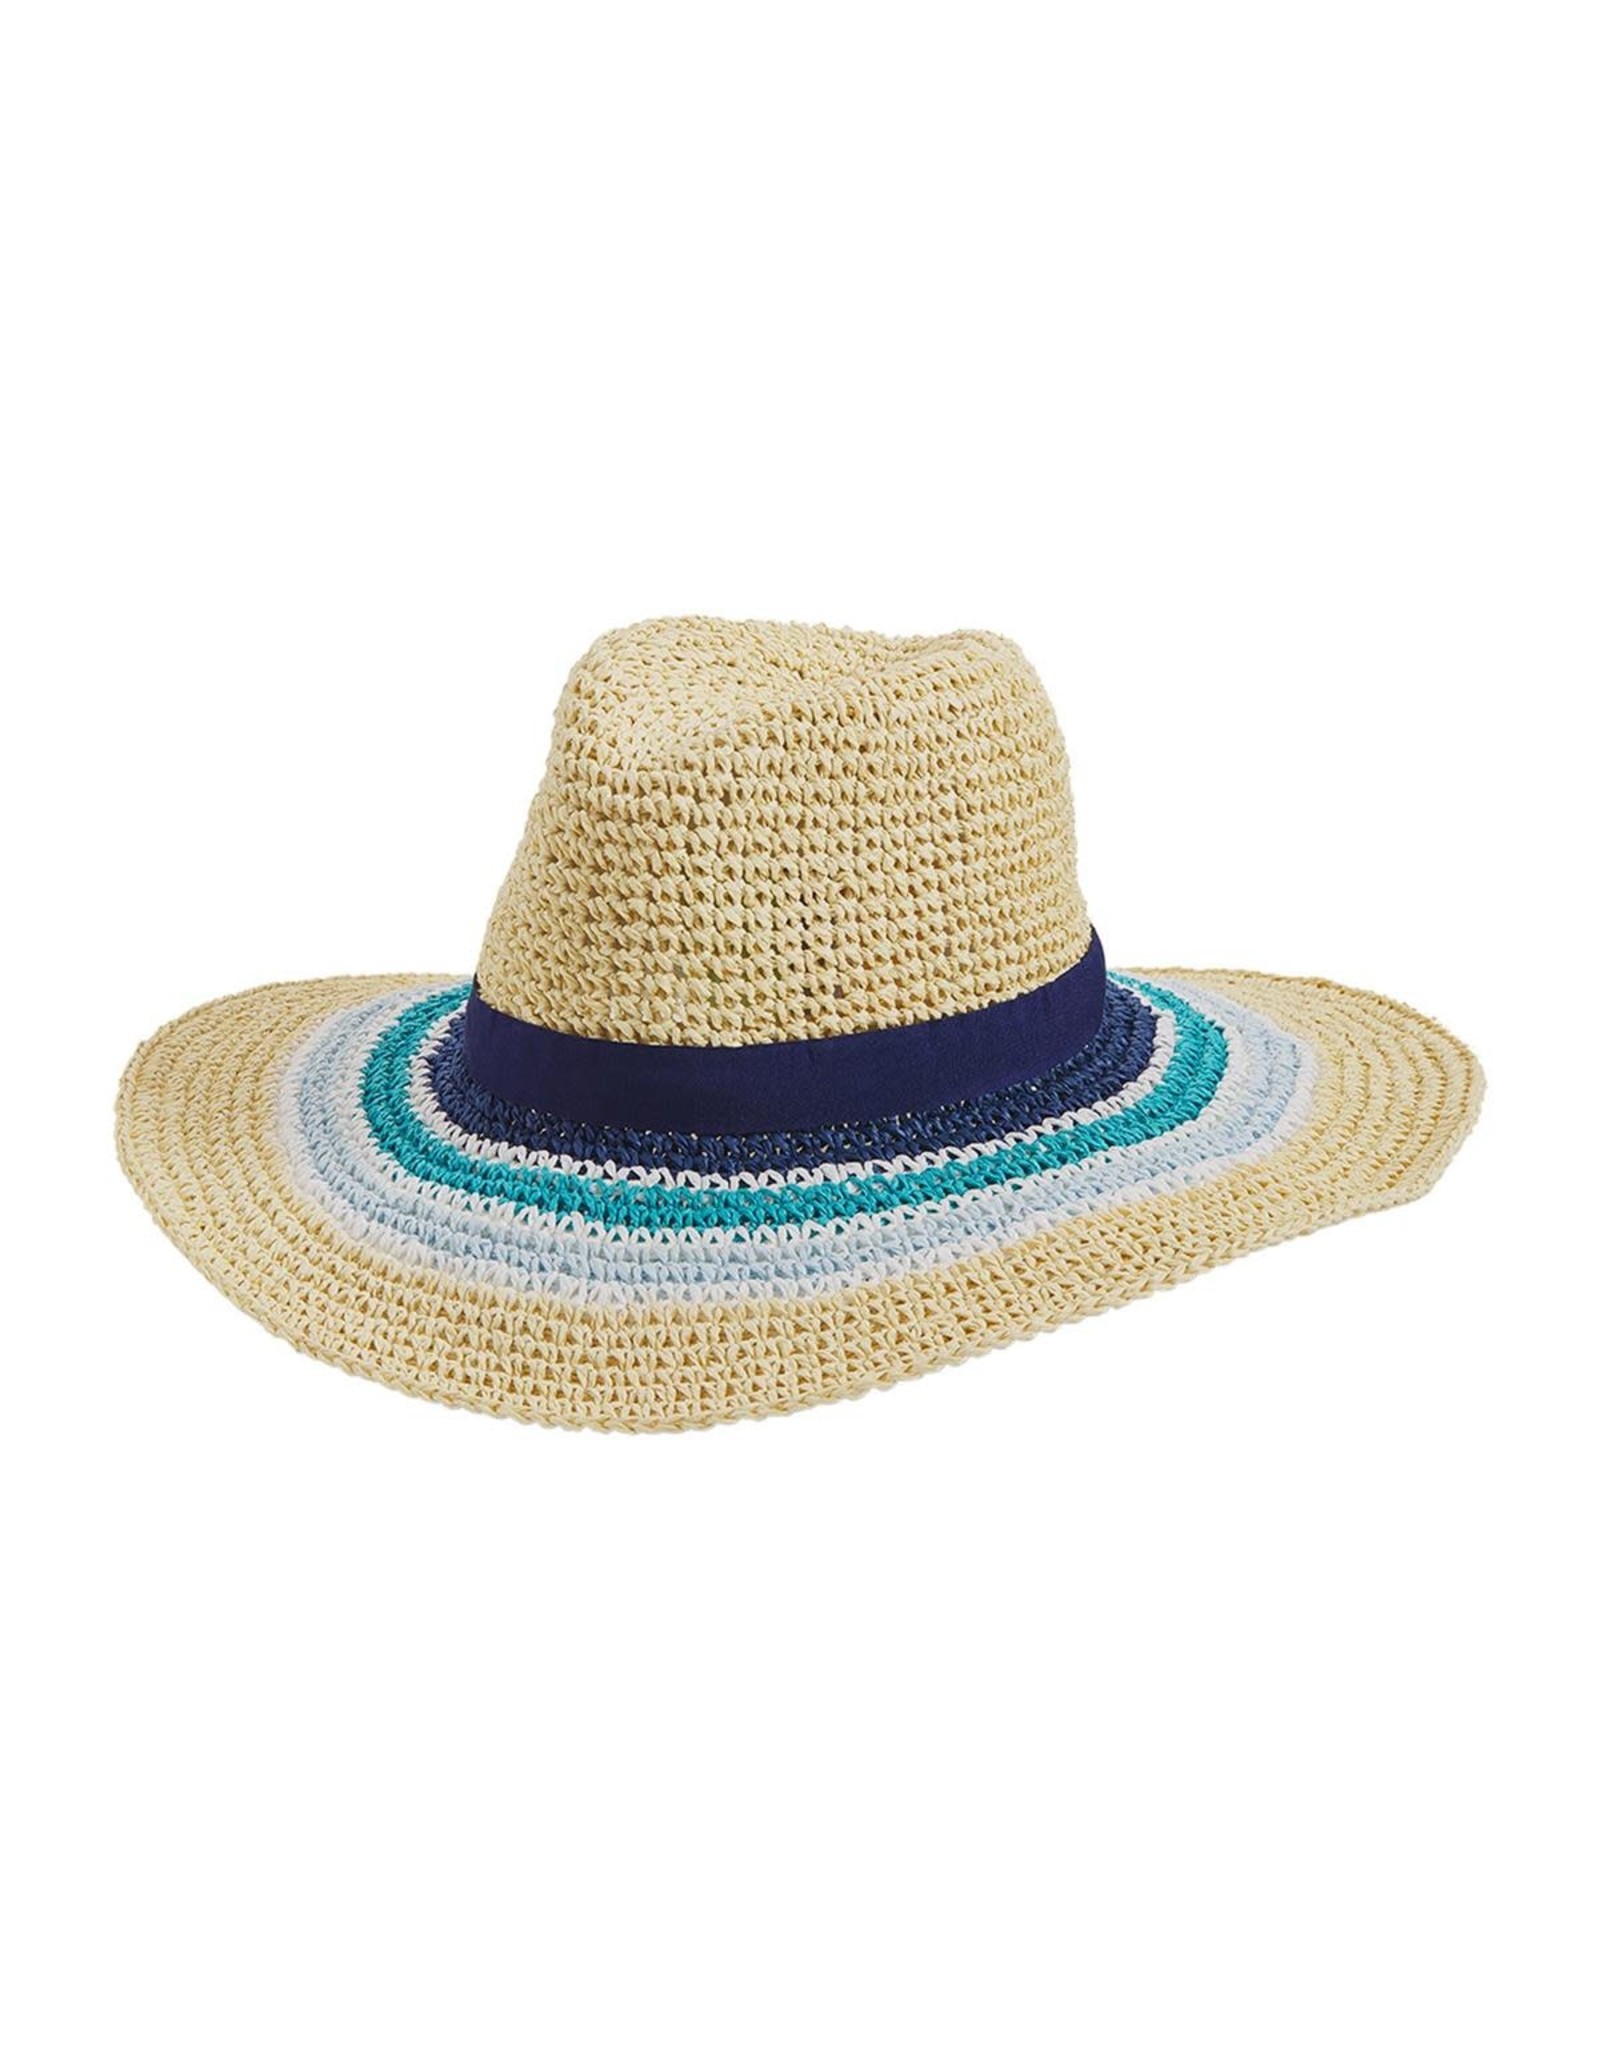 Mud Pie Women's Hats - Striped Straw Fedora Blue